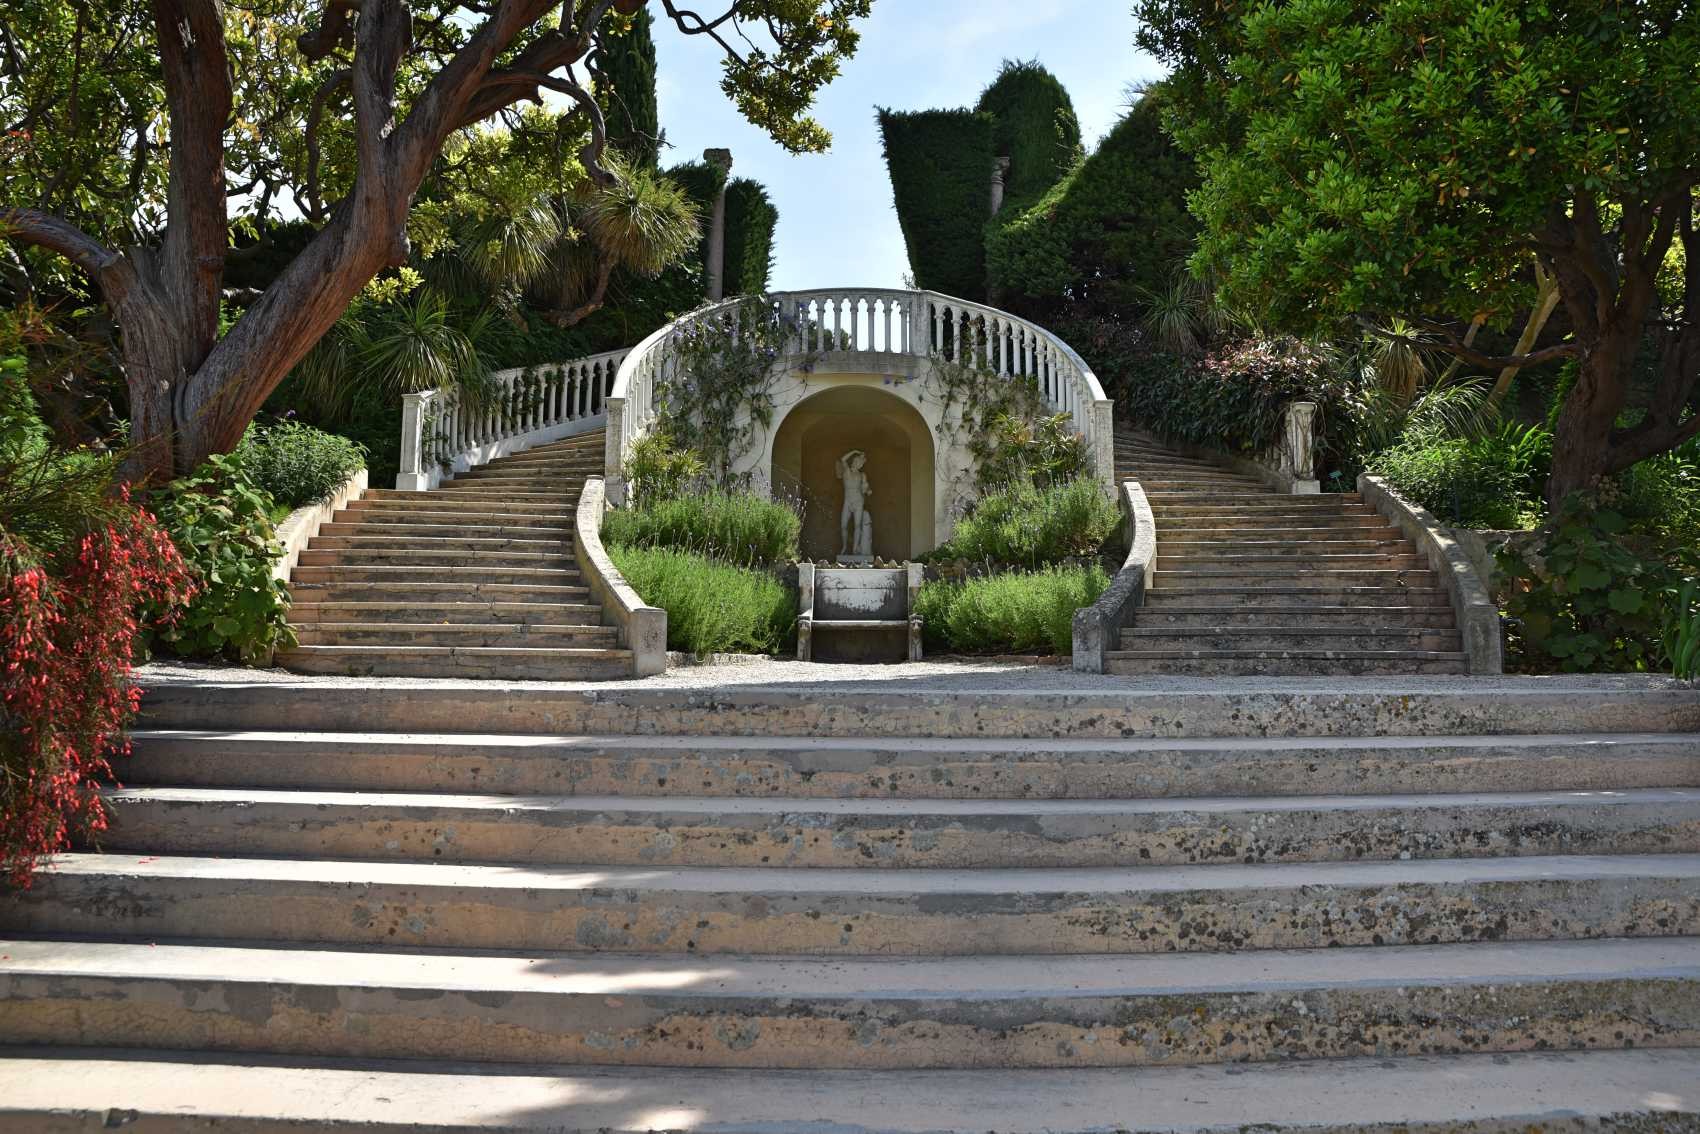 Le jardin florentin est le seul vestige de l'immense jardin italien